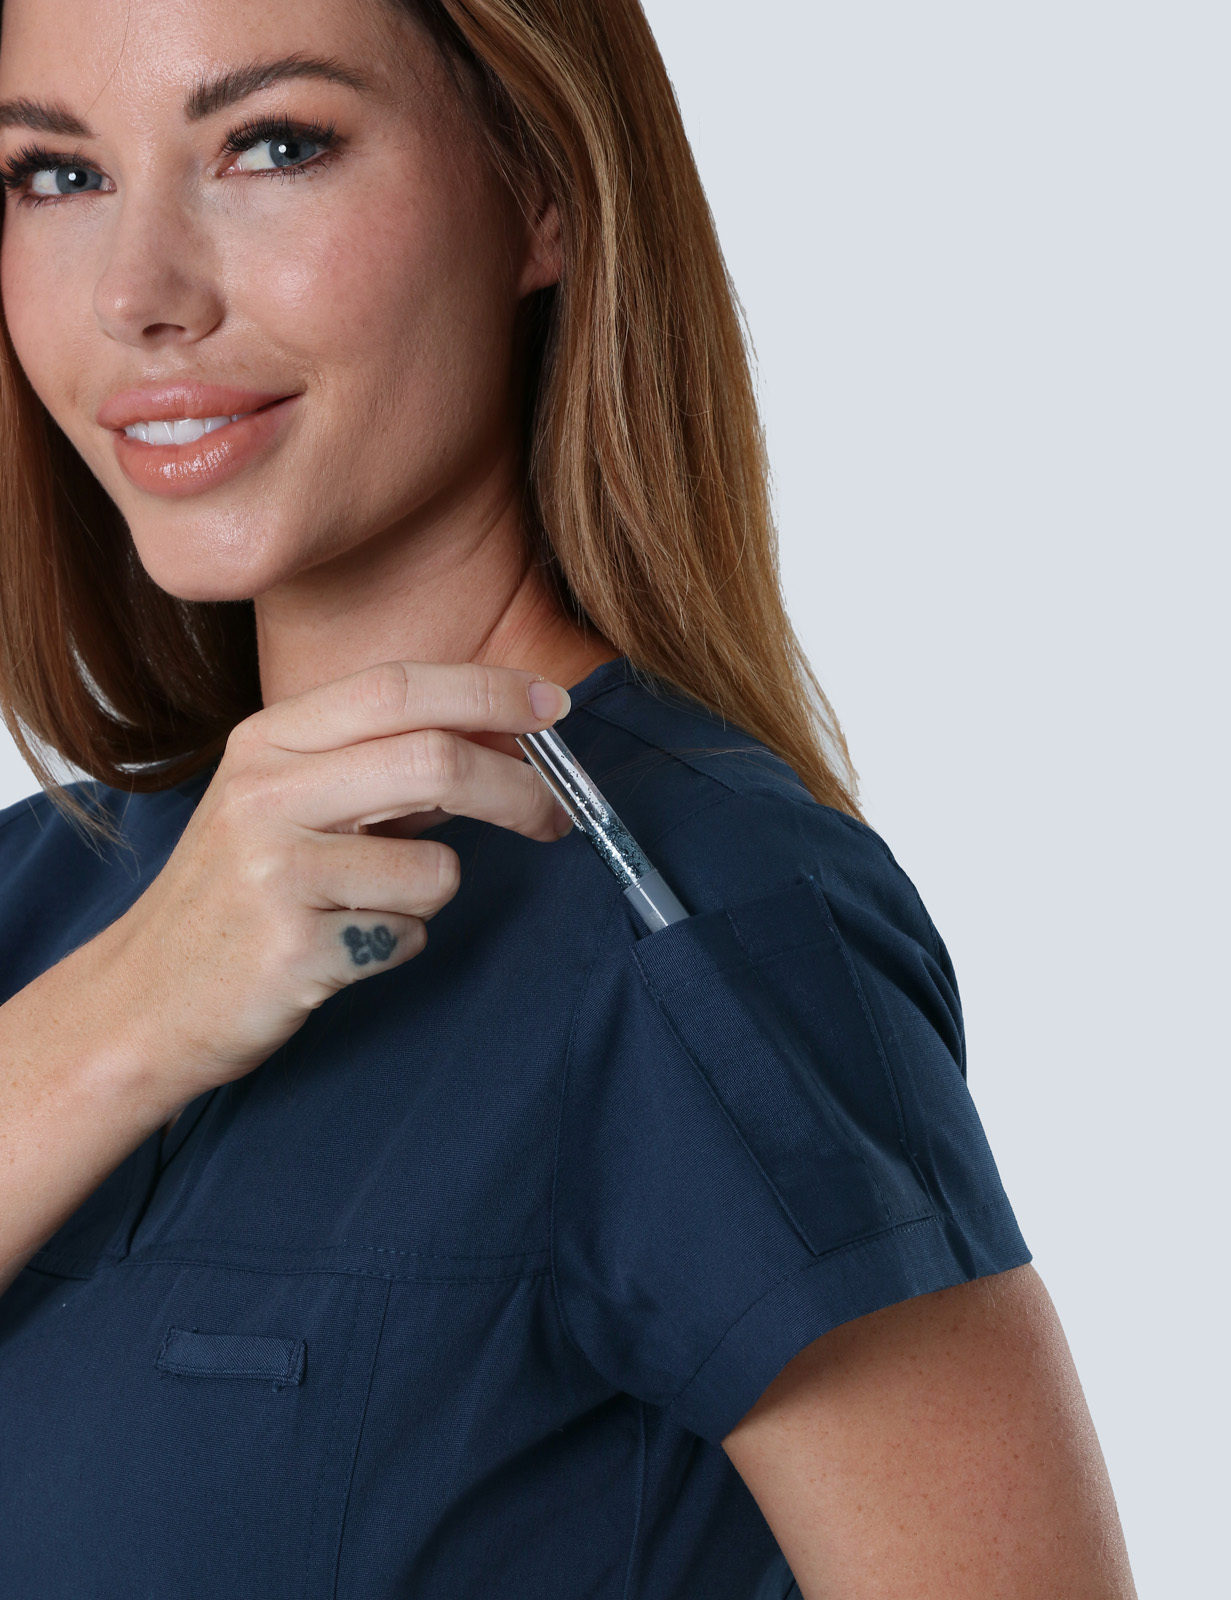 Bundaberg Hospital - MI Nurse (Women's Fit Solid Scrub Top and Cargo Pants in Navy incl Logos)